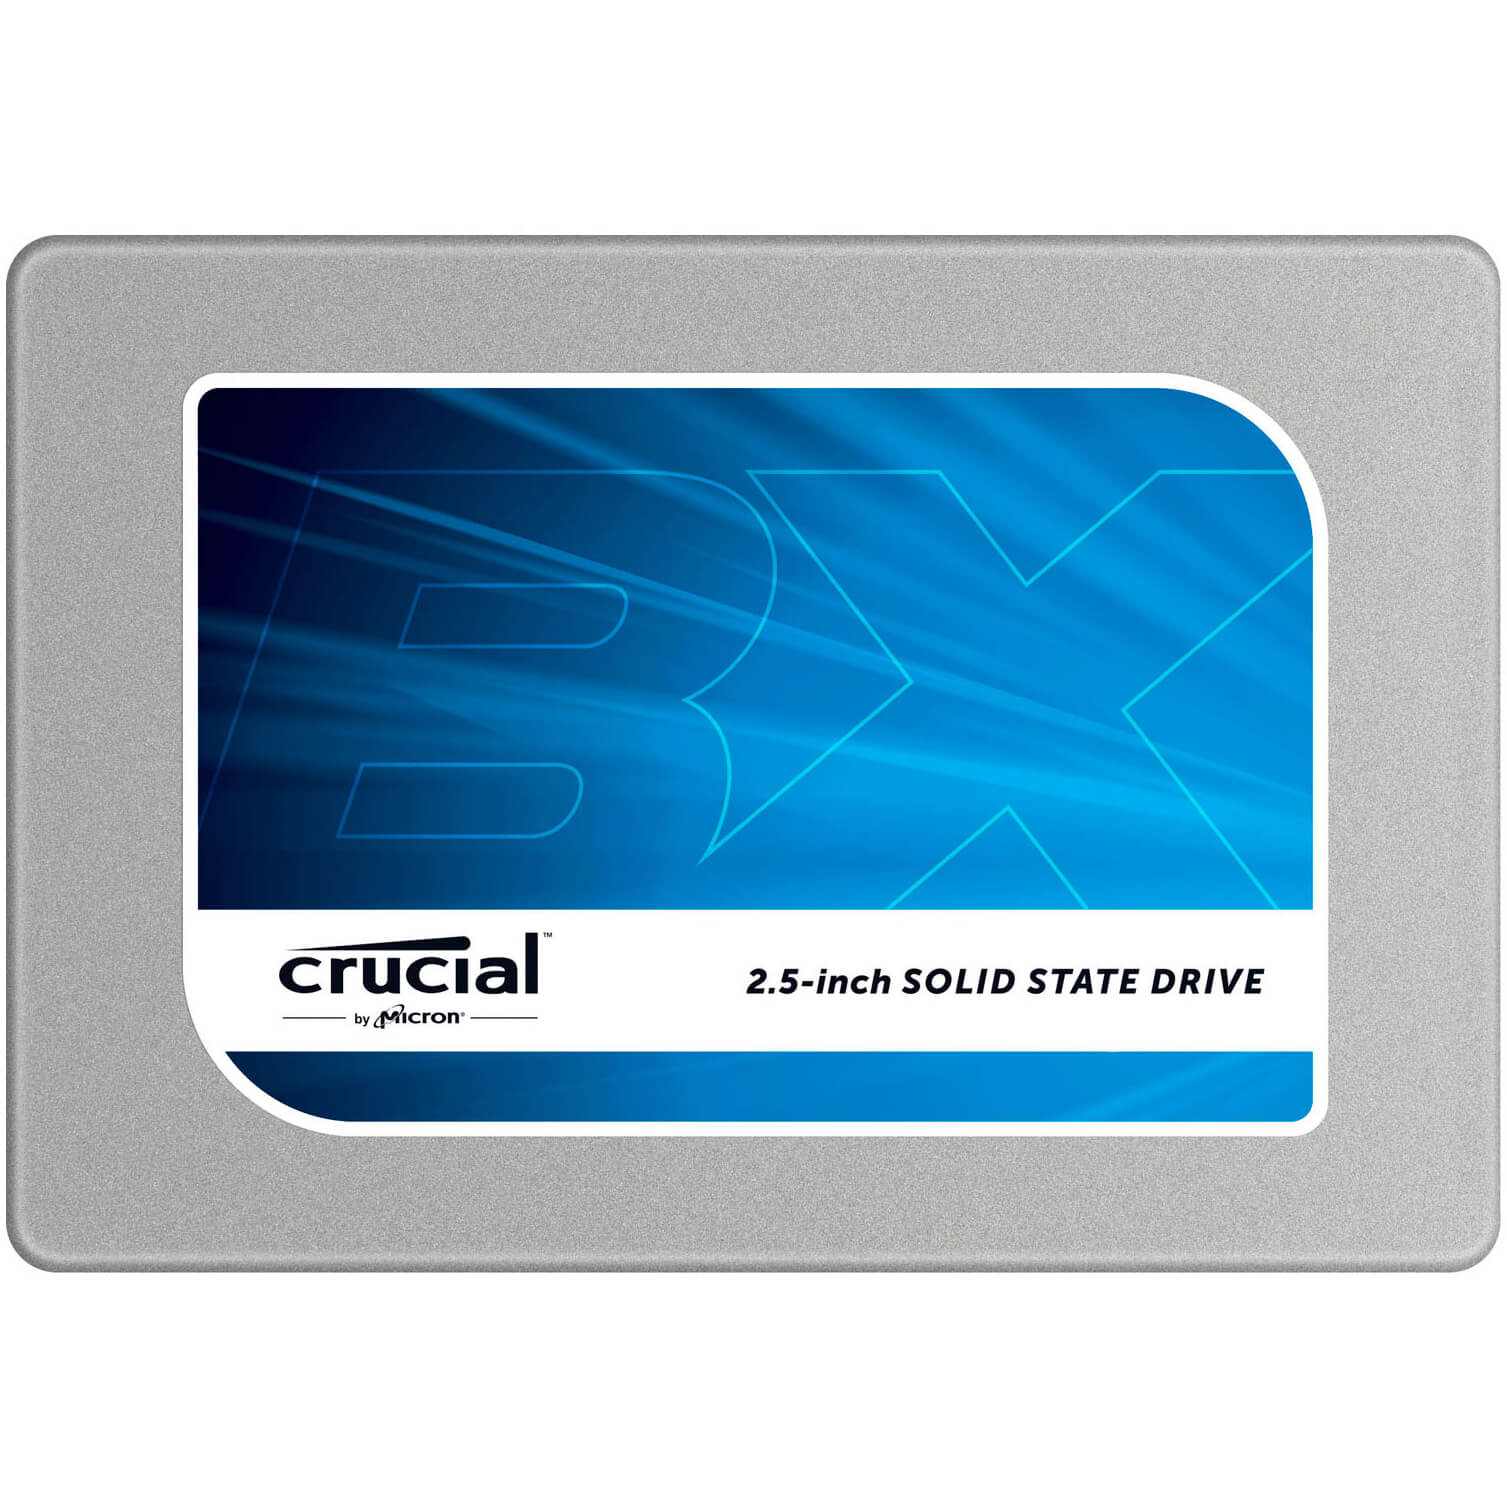  SSD Crucial BX100 120GB SATA3, 535/185 MBs 